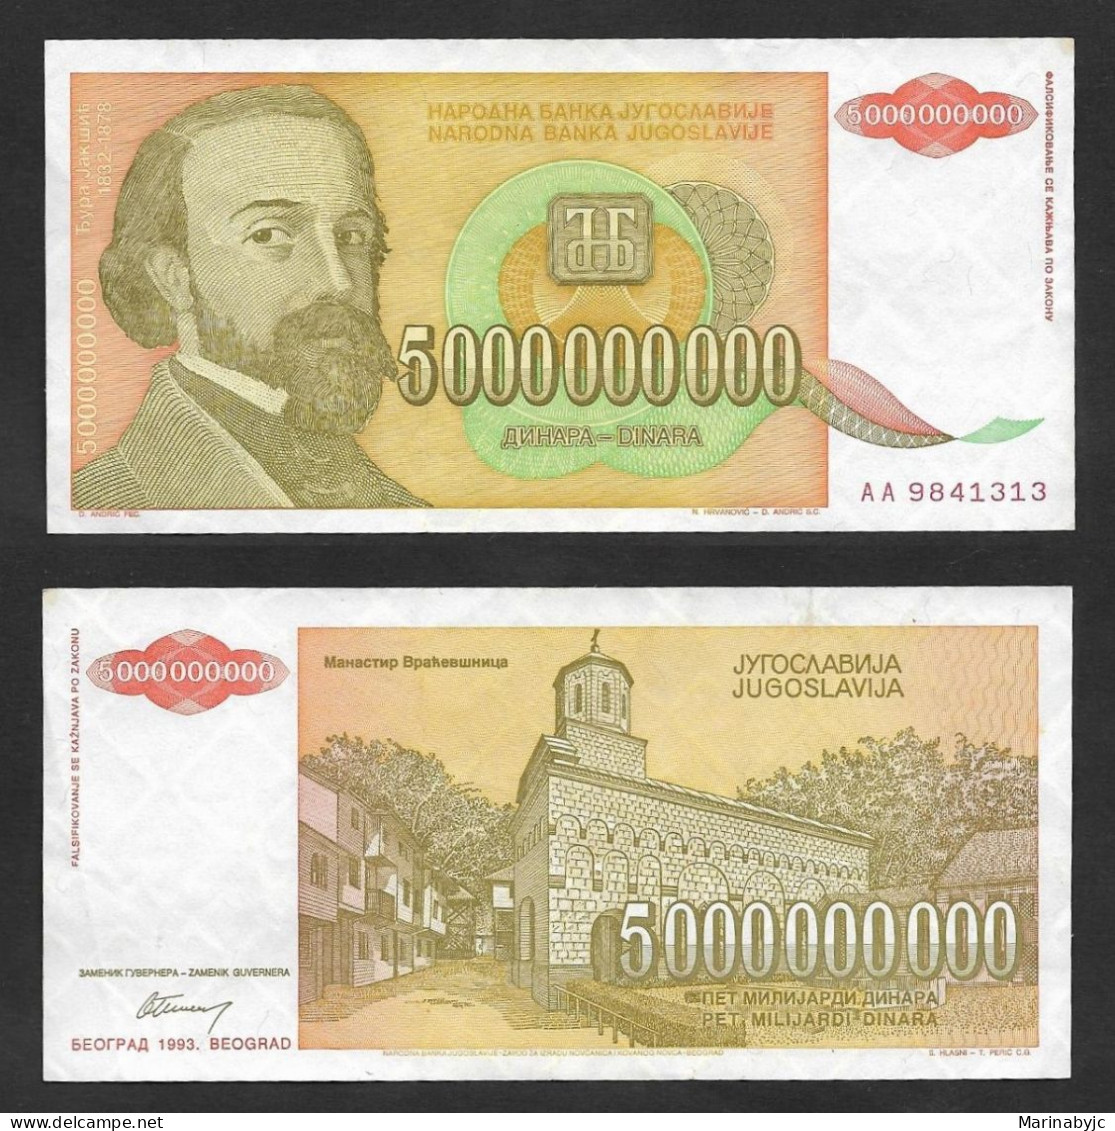 SE)1993 YUGOSLAVIA, BANKNOTE OF 5,00,000,000 DINARS OF THE CENTRAL BANK OF YUGOSLAVIA, WITH REVERSE, VF - Usados